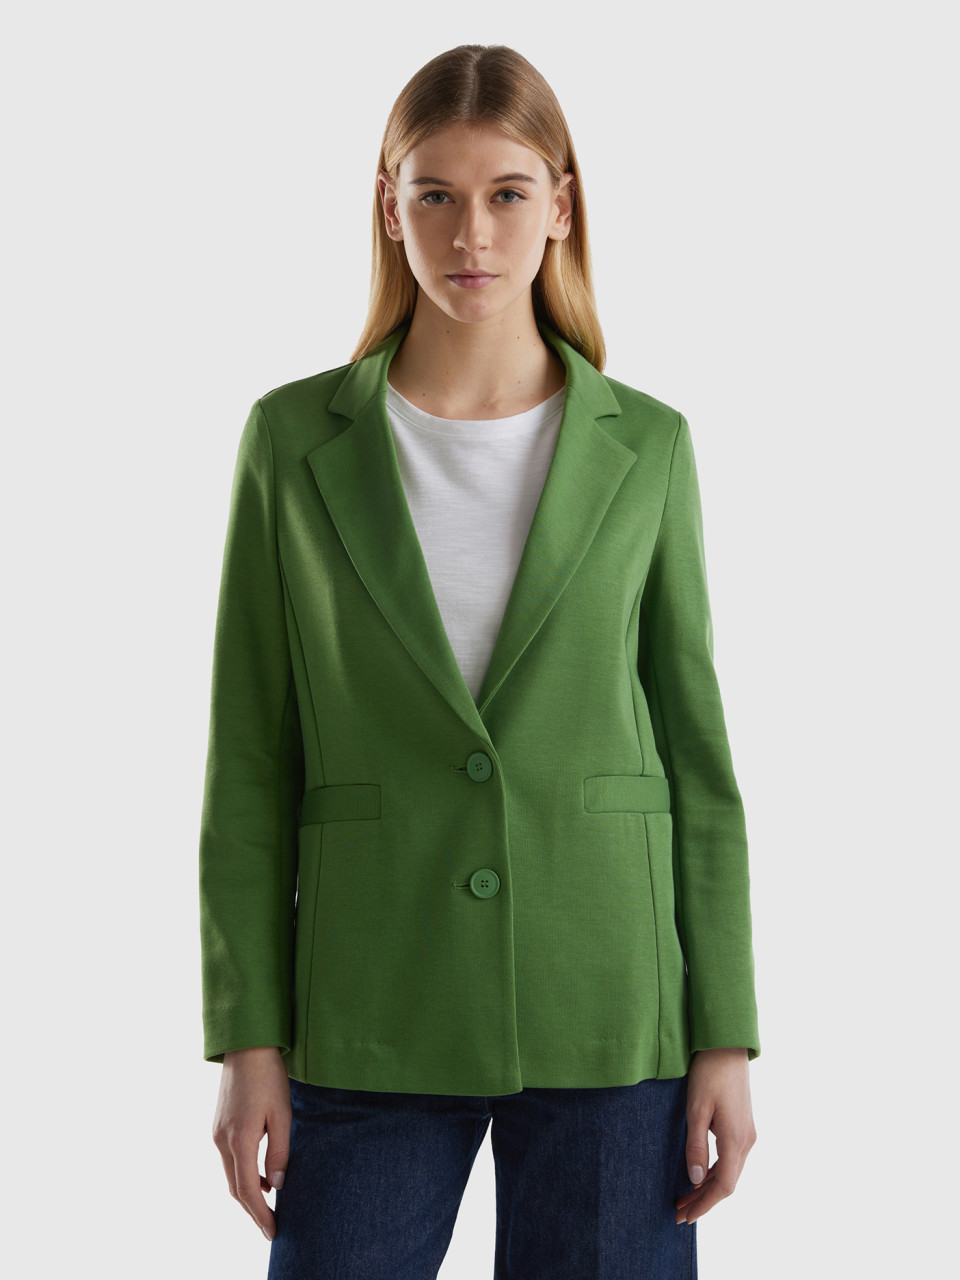 Benetton, Fitted Blazer In Cotton Blend, Military Green, Women